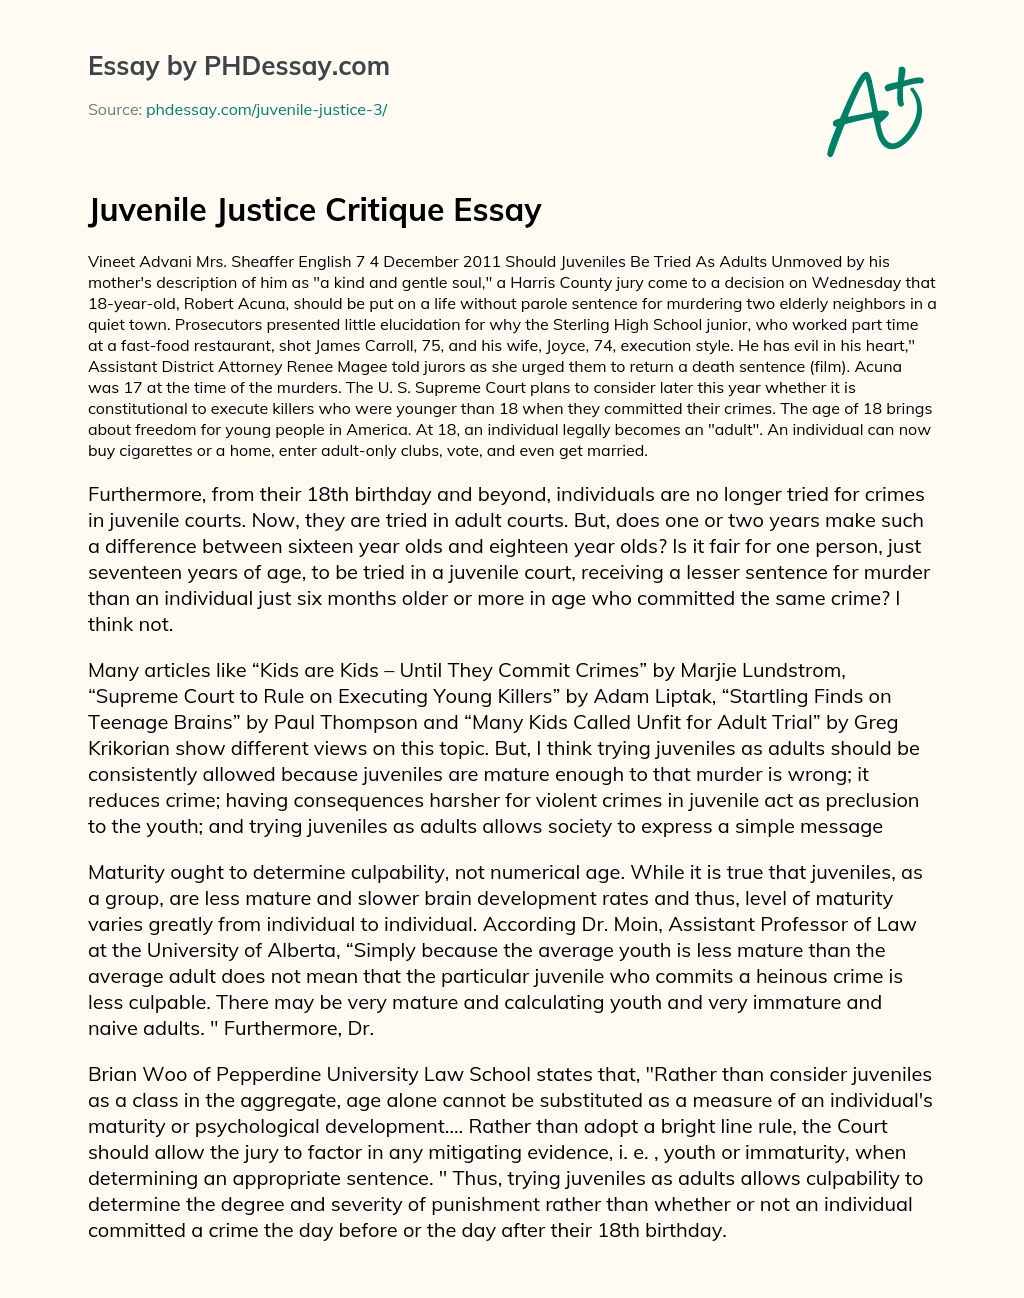 essay about juvenile justice